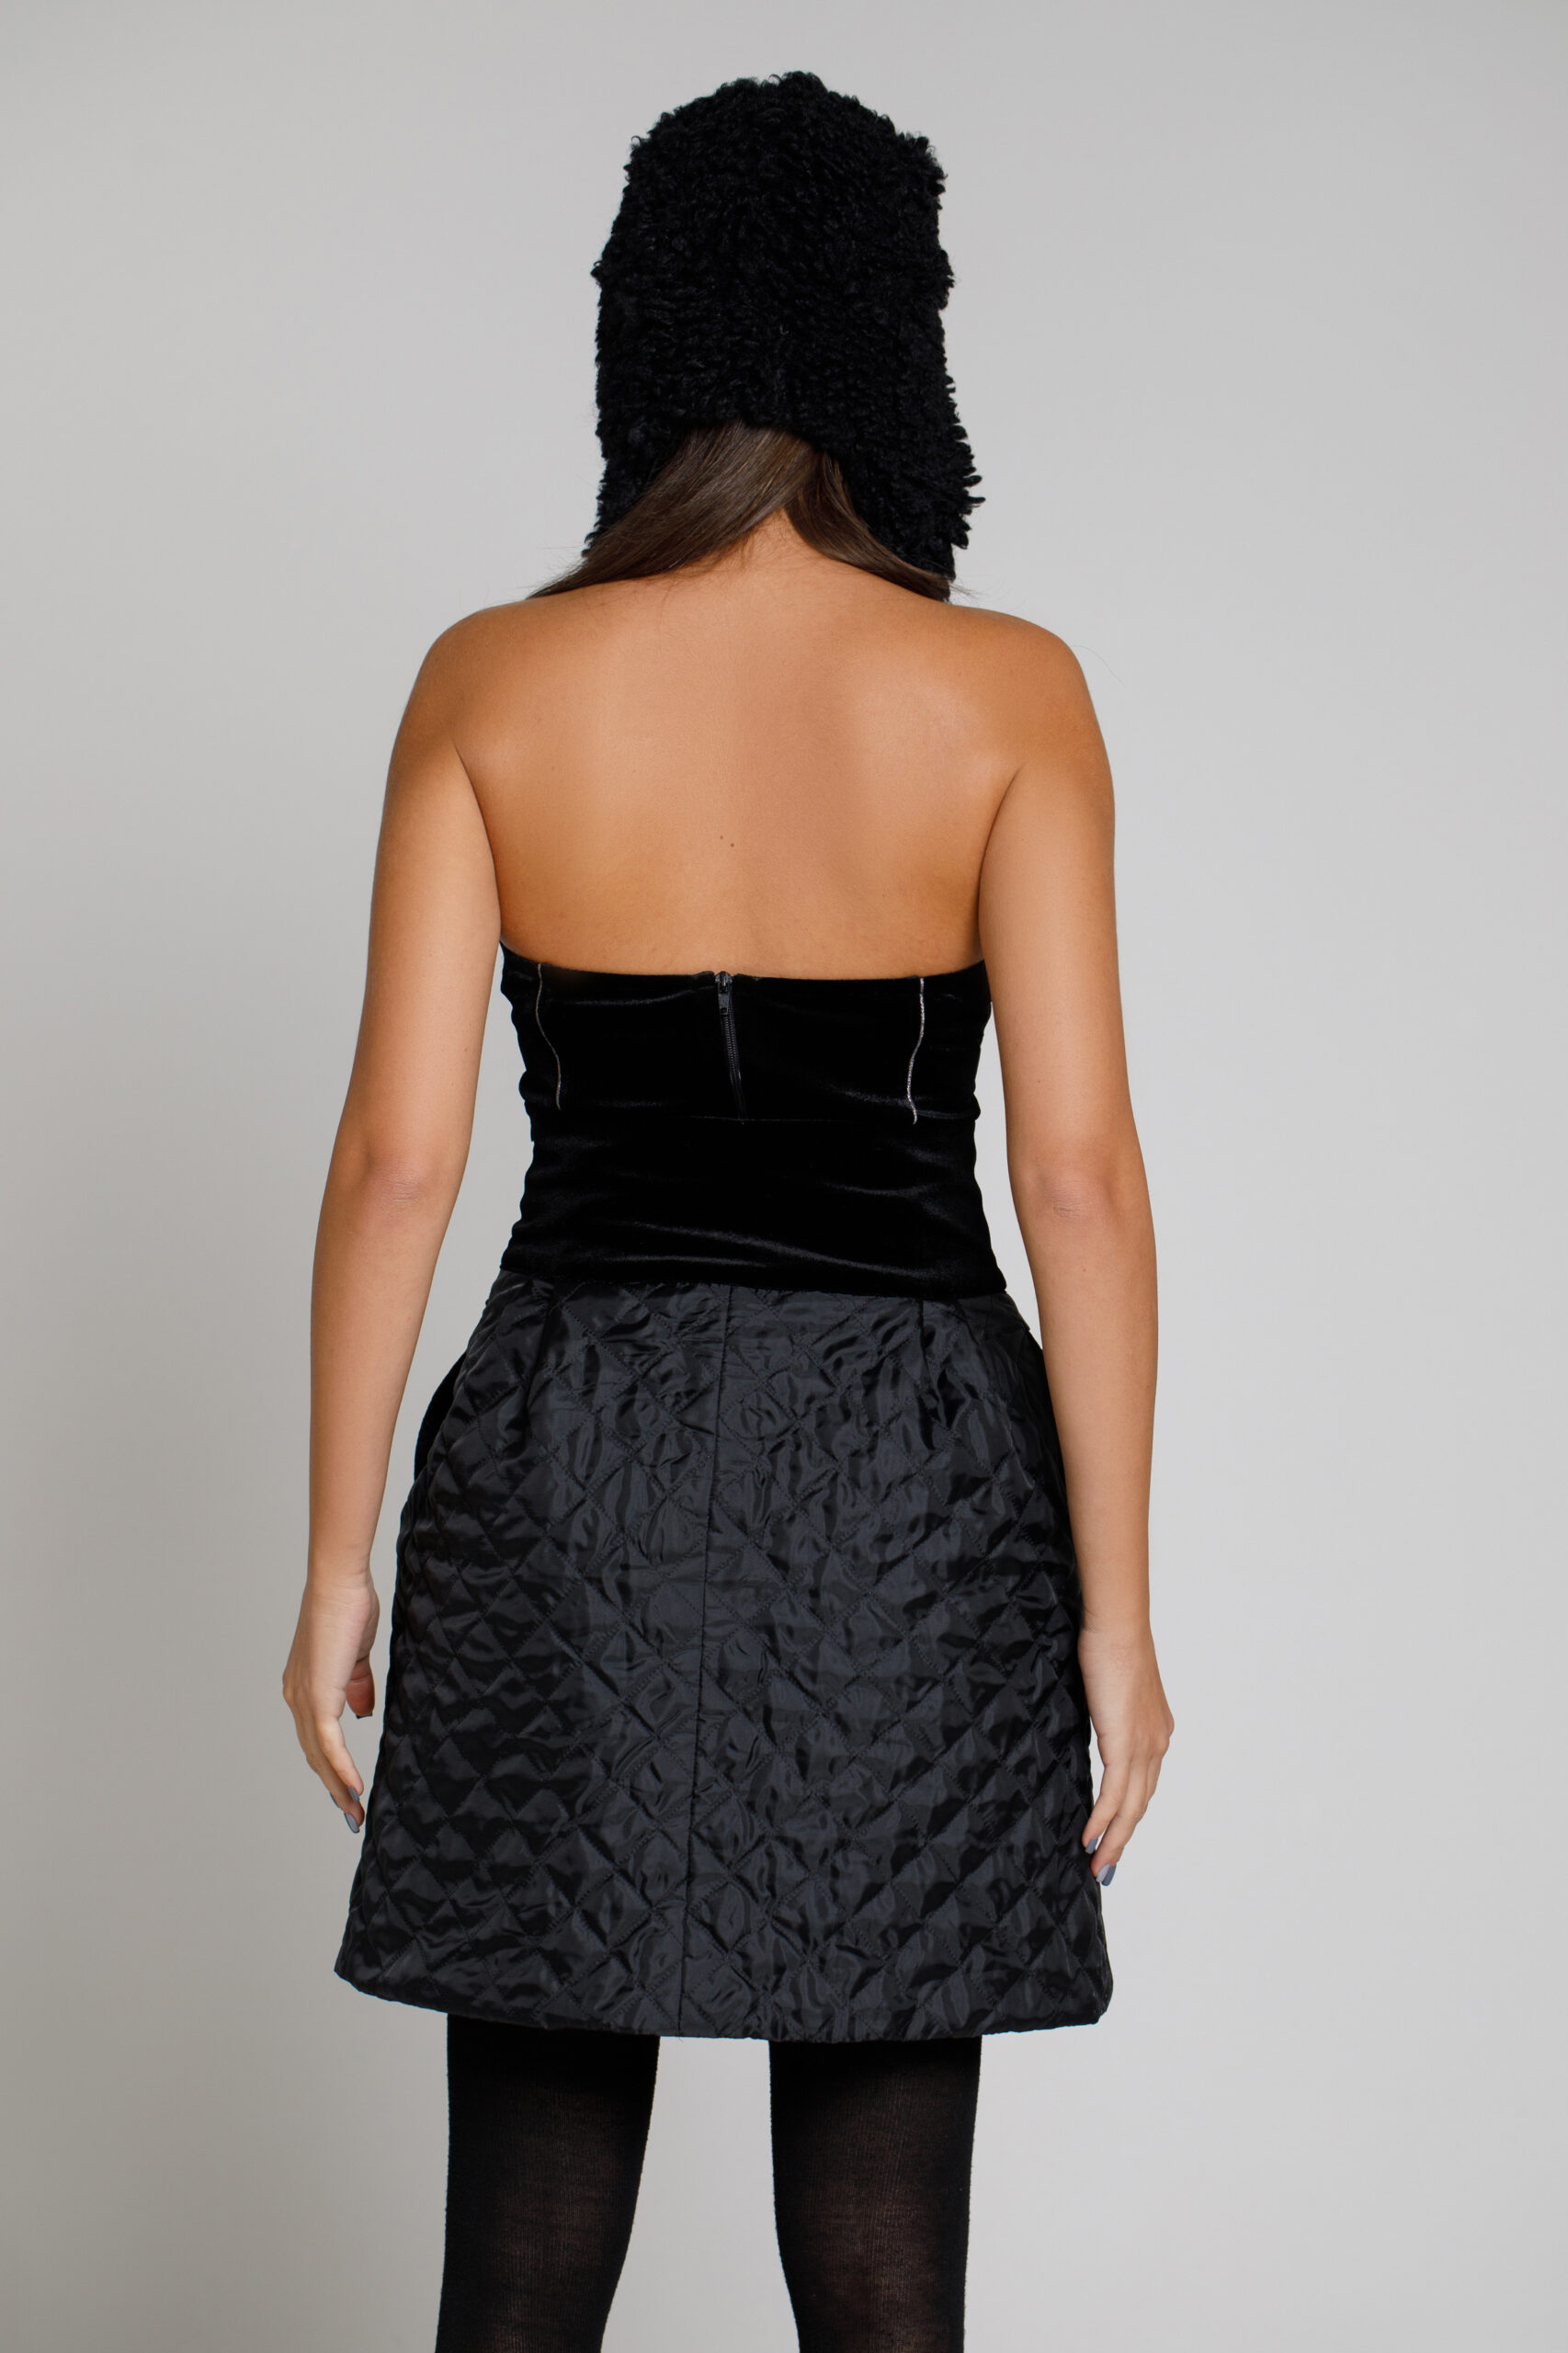 HEBA skirt in black quilted and velvet. Natural fabrics, original design, handmade embroidery